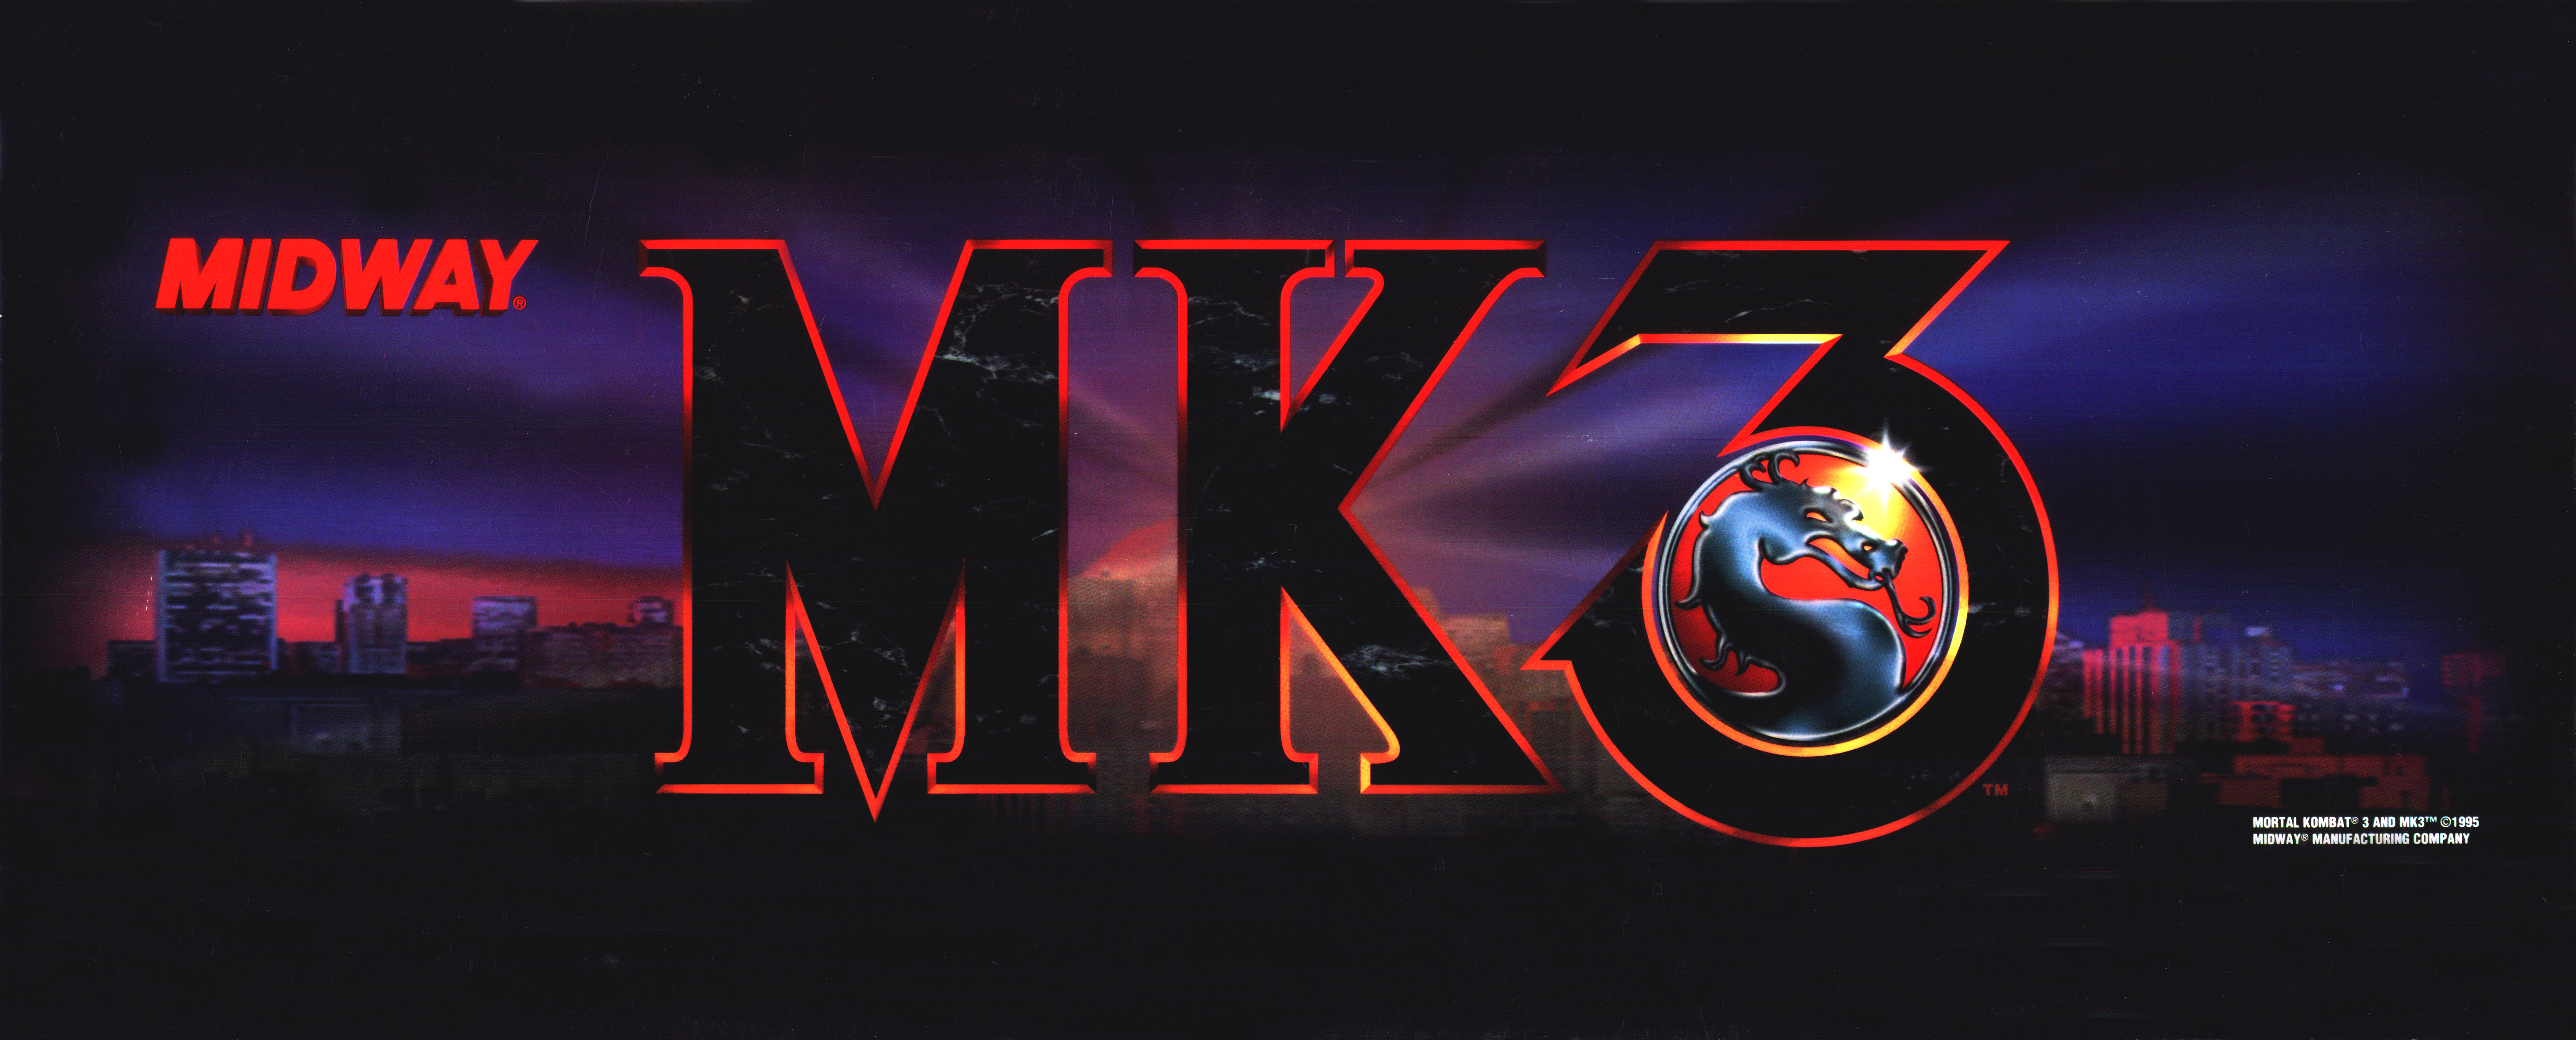 Мортал комбат 3 столбики. Mk3 Ultimate. МК 3. Mortal Kombat 3. Mortal Kombat 3 Arcade.